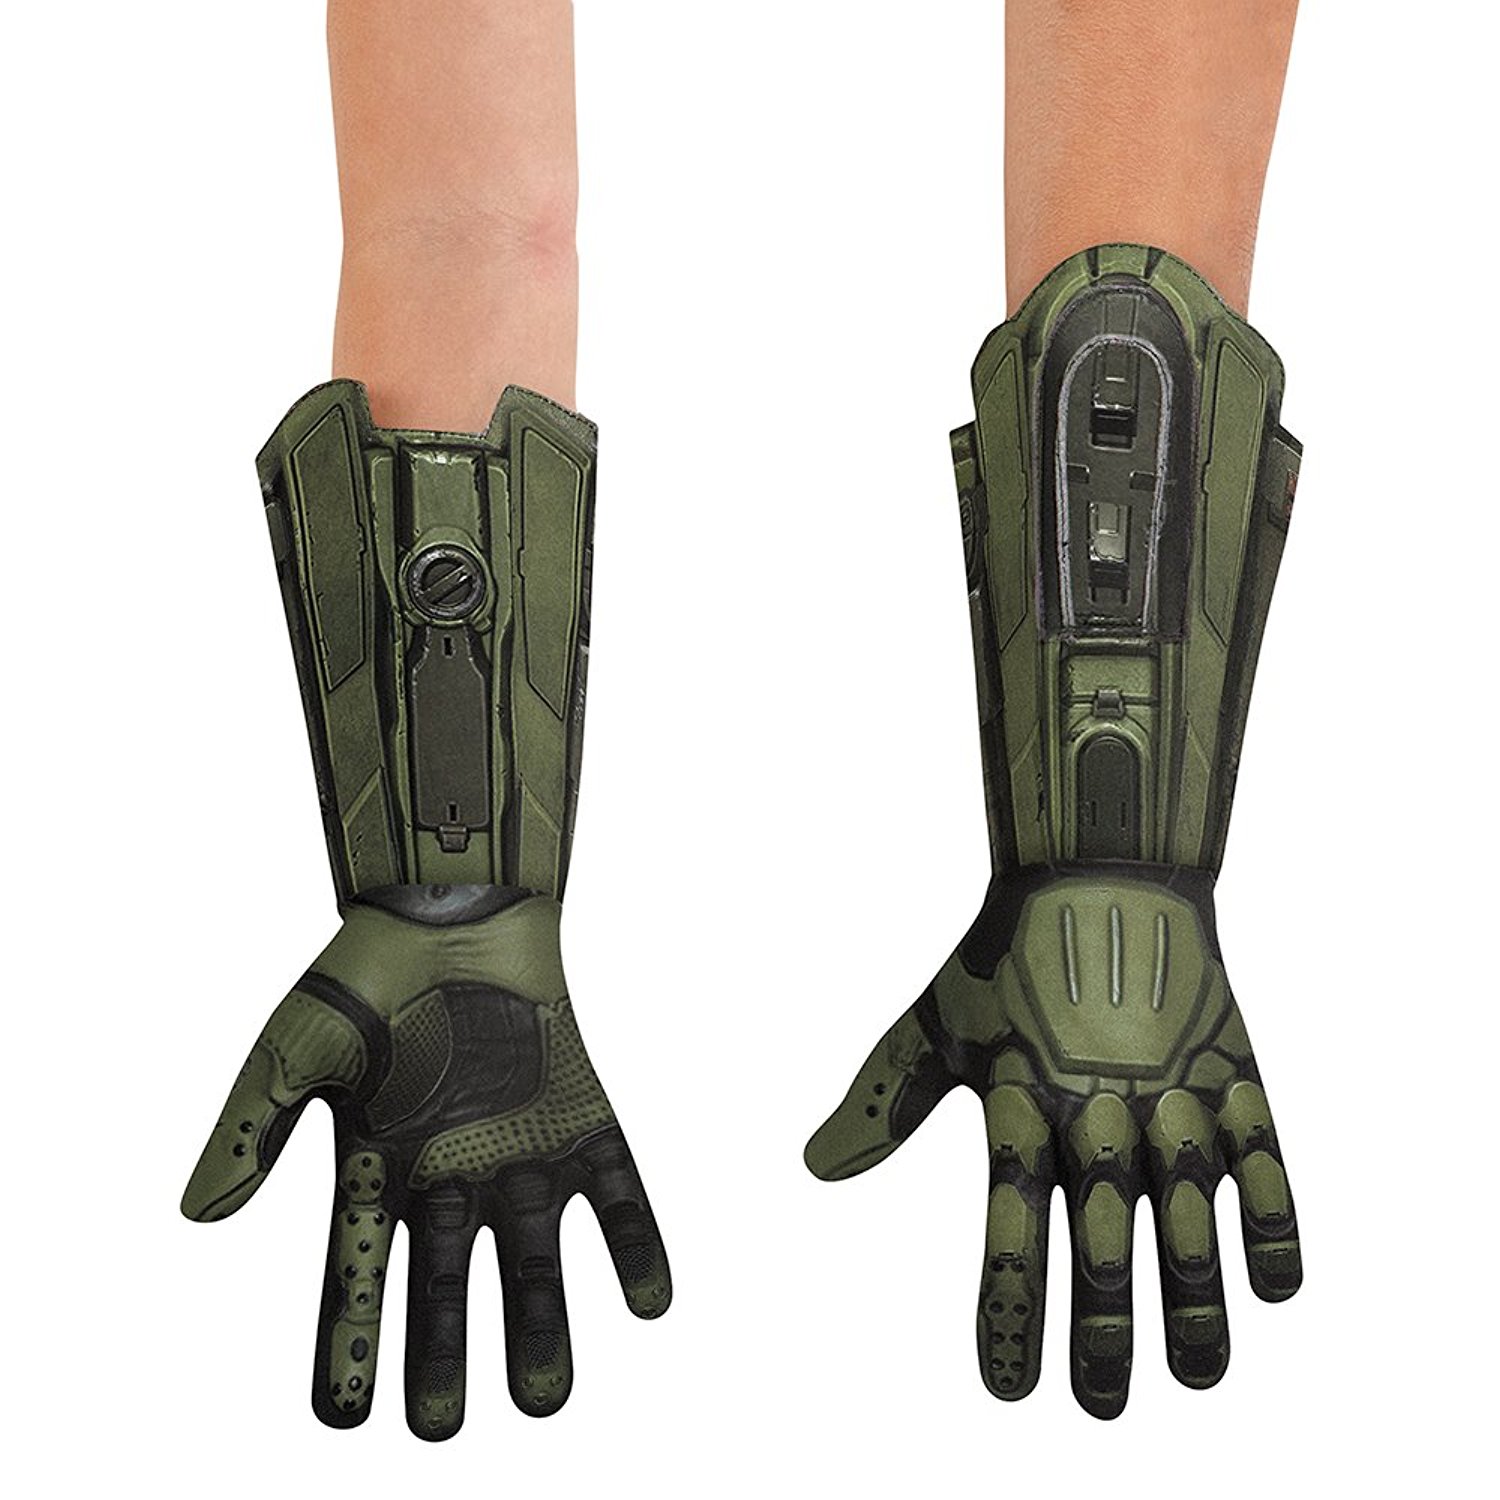 Halo Master Chief Costume Gloves